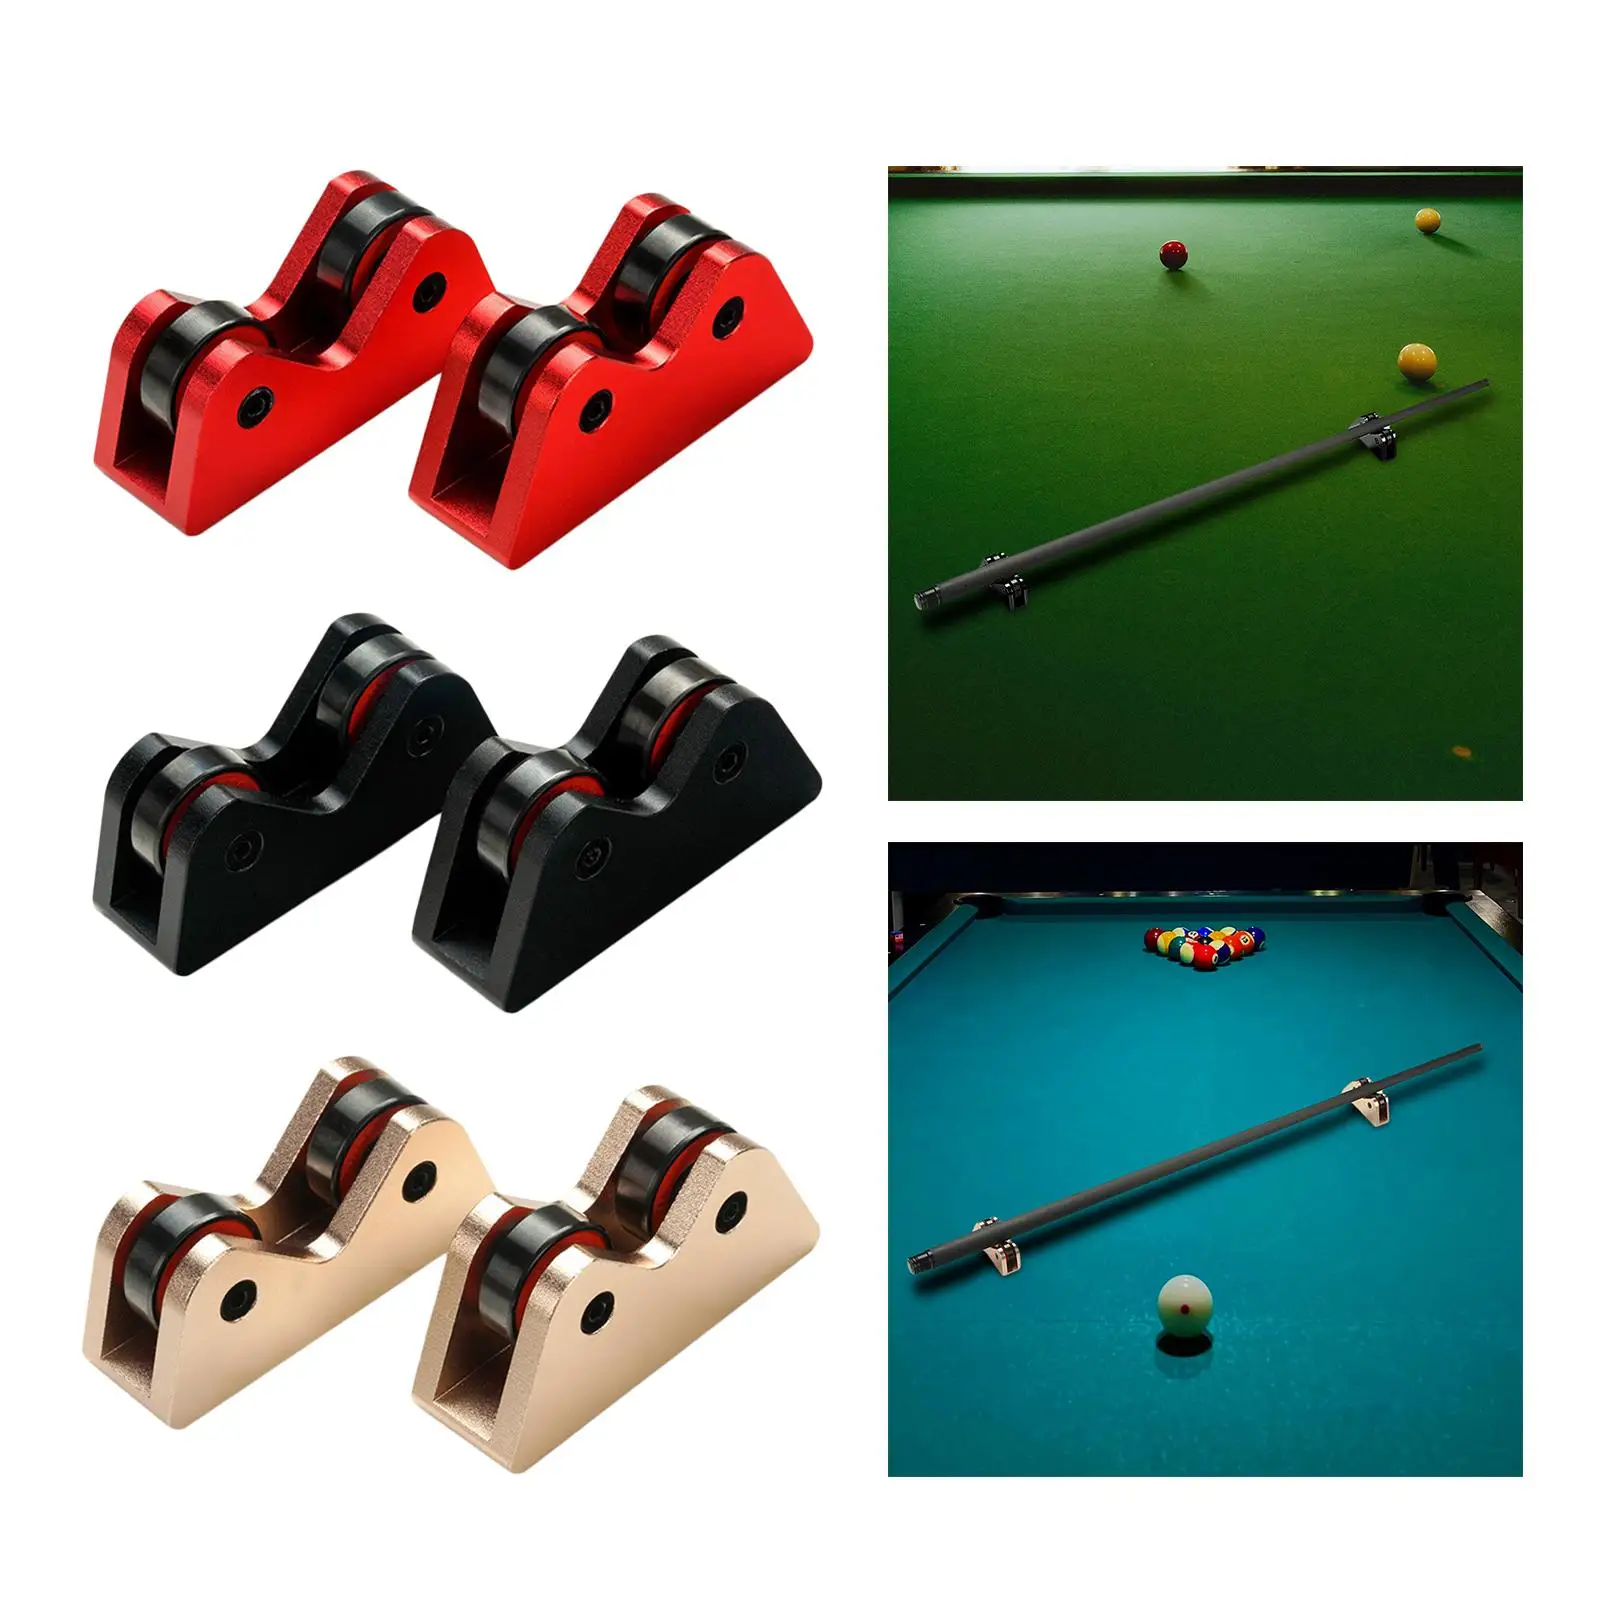 2x Pool Billiard Cue Straightness Checker Detection Tool Snooker Club Straightness Detector Portable for Club Parts Maintenance